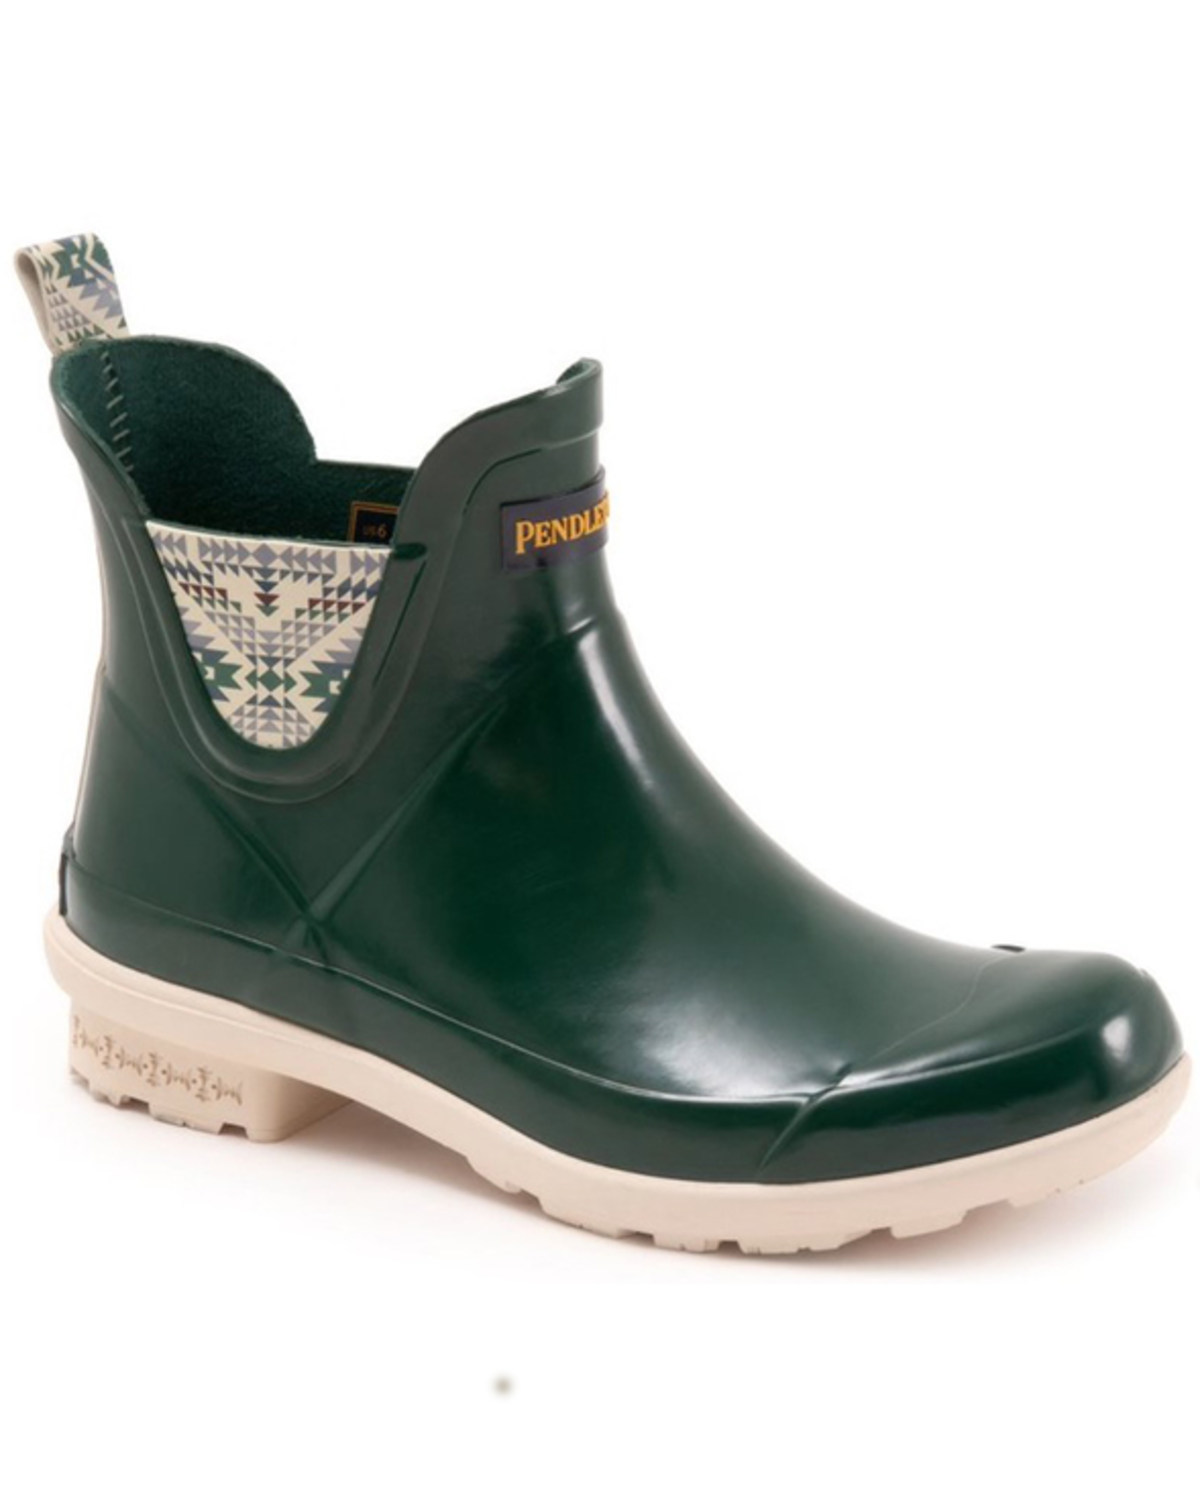 Pendleton Women's Smith Rock Gloss Chelsea Rain Boots - Round Toe